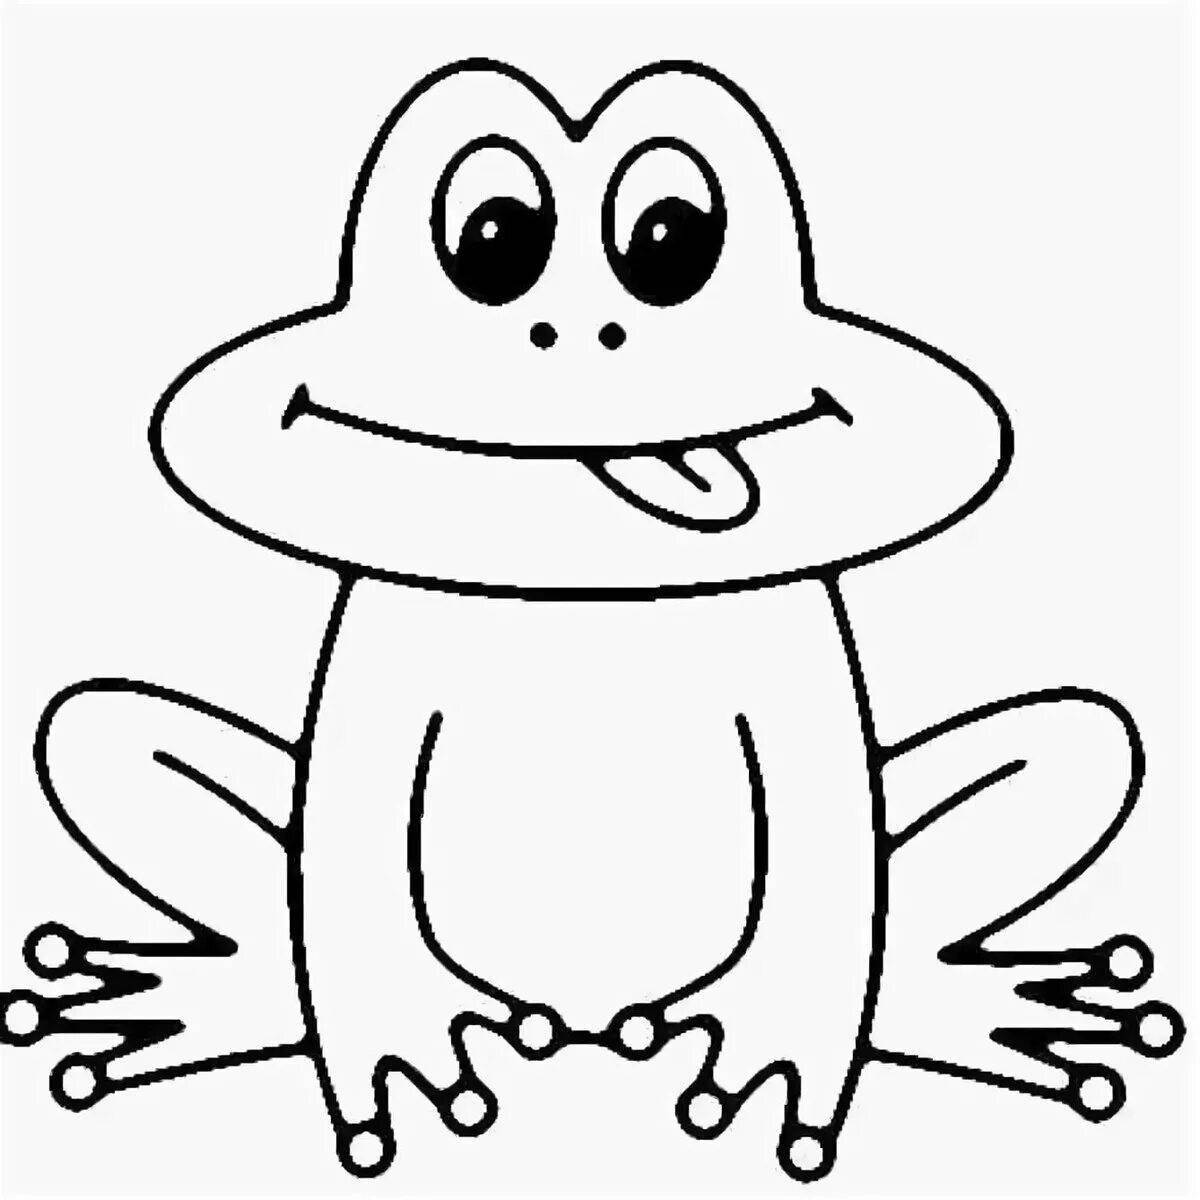 Joyful frog drawing for kids